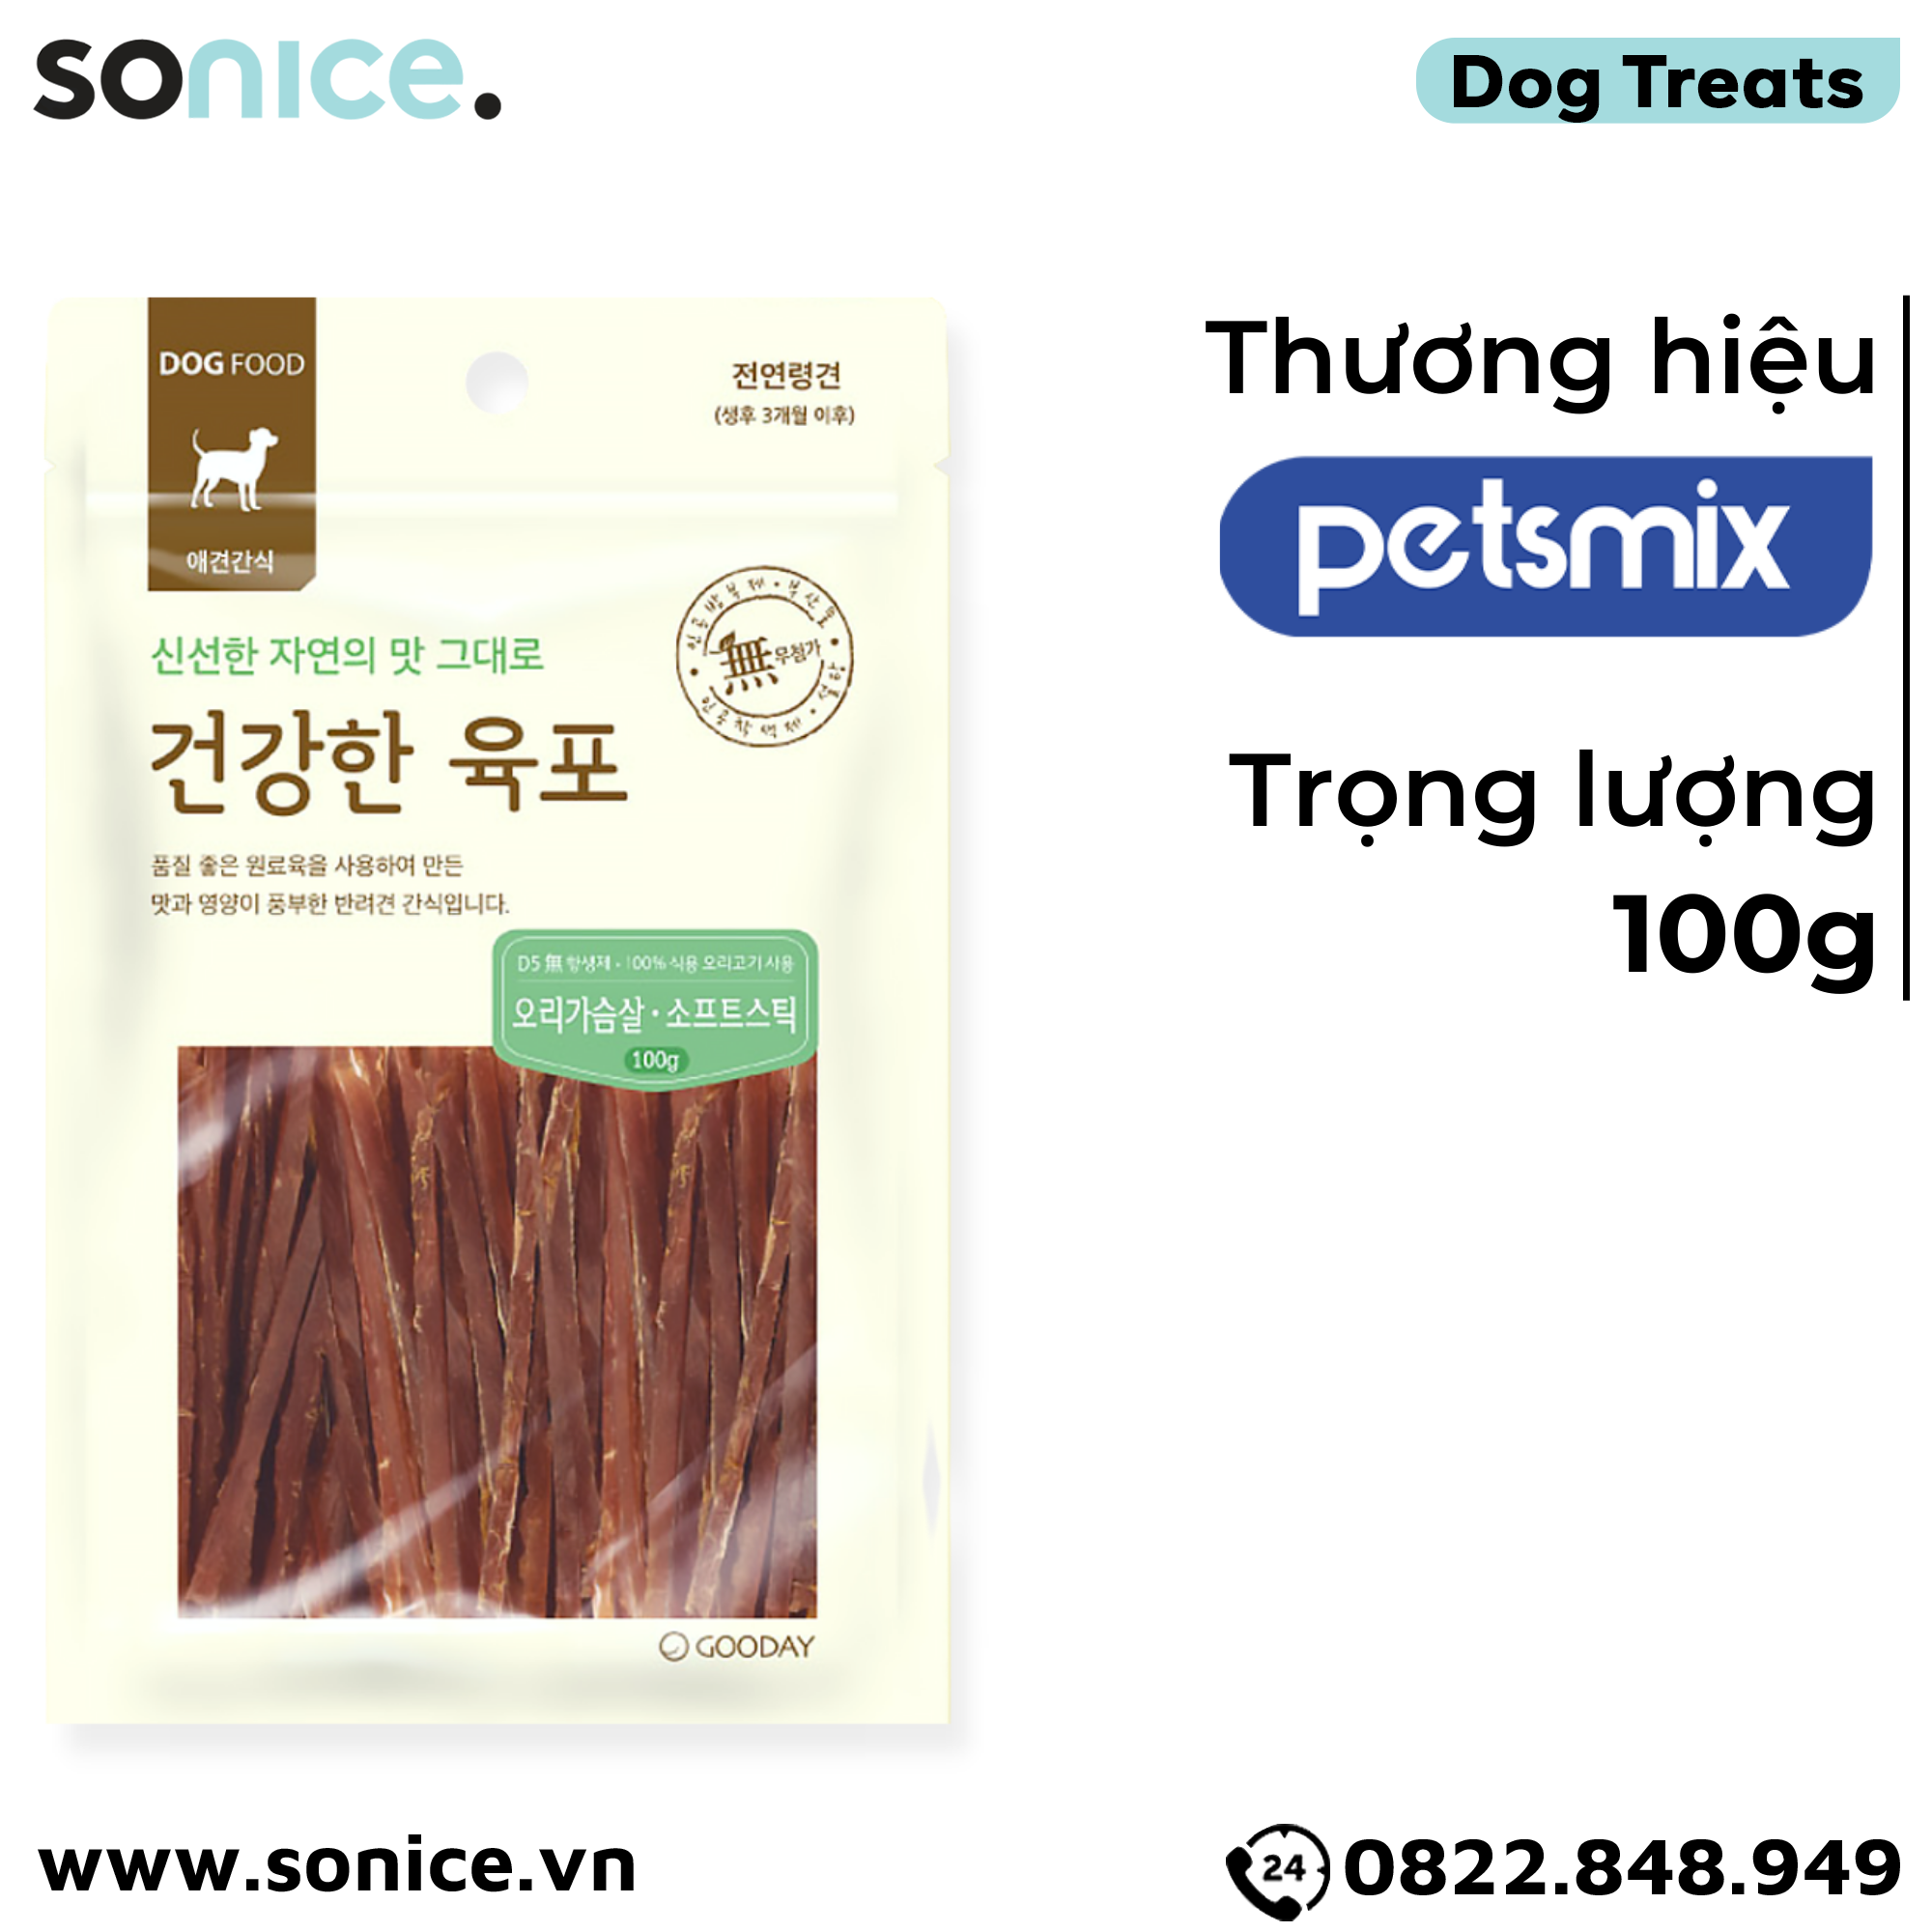  Treat chó Petsmix Soft Duck Stick 100g - thịt vịt que mềm dog treats SONICE. 